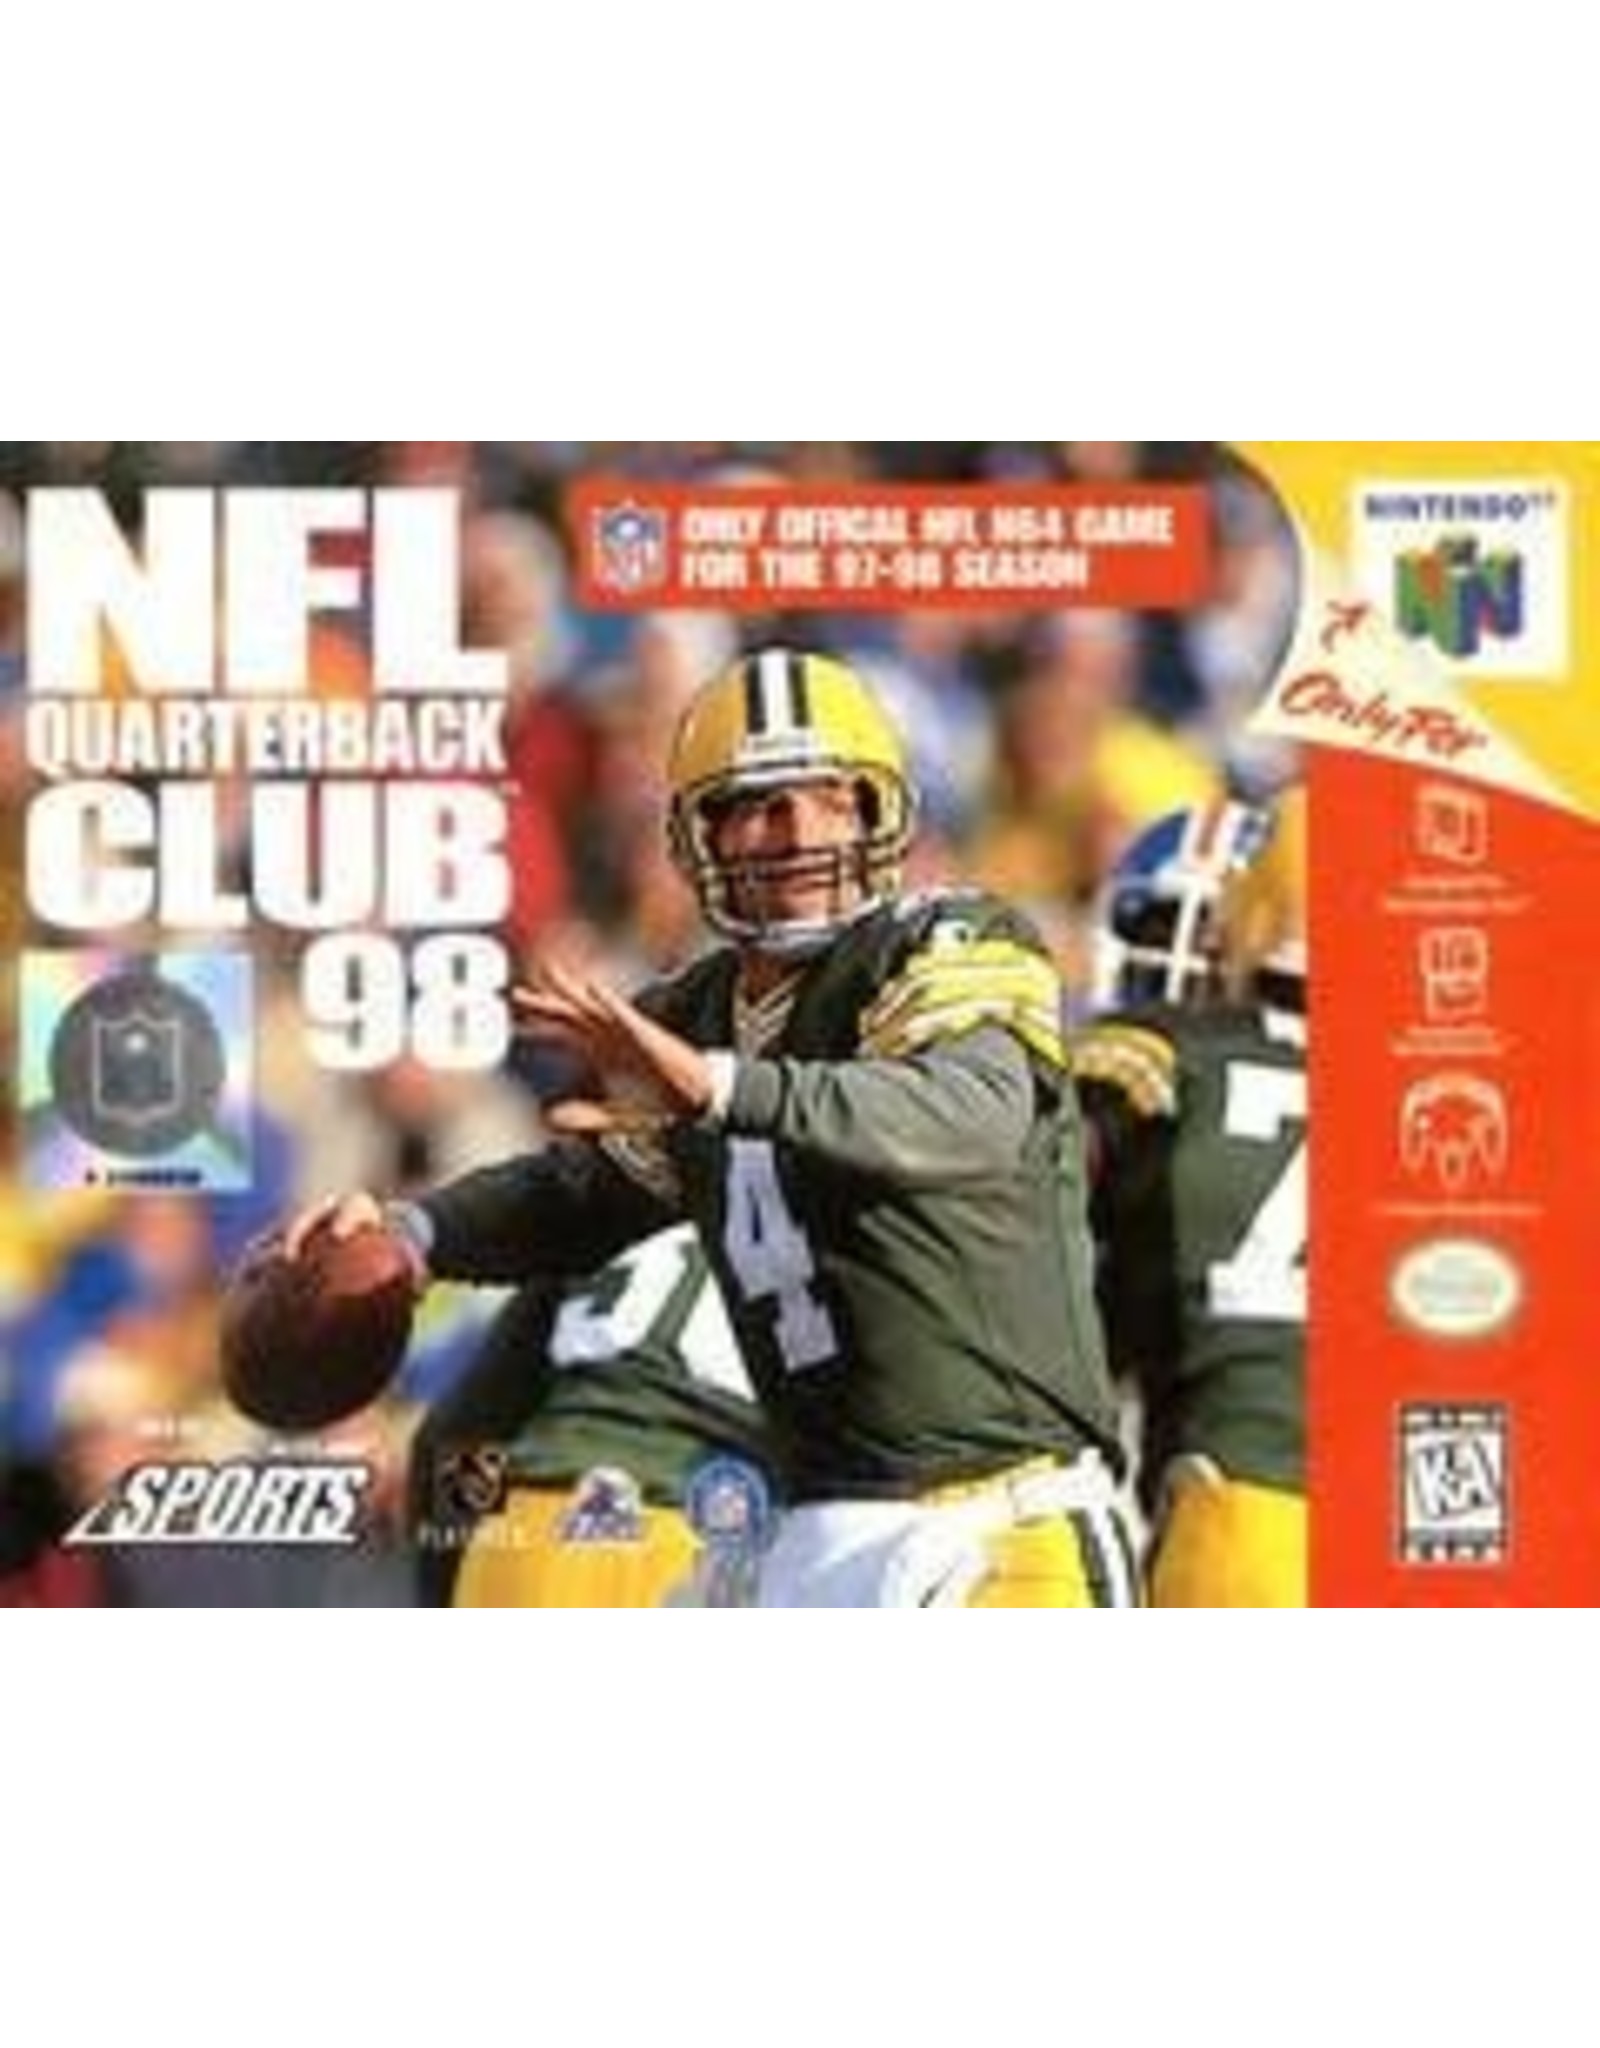 Nintendo 64 NFL Quarterback Club 98 (Used, Cart Only)